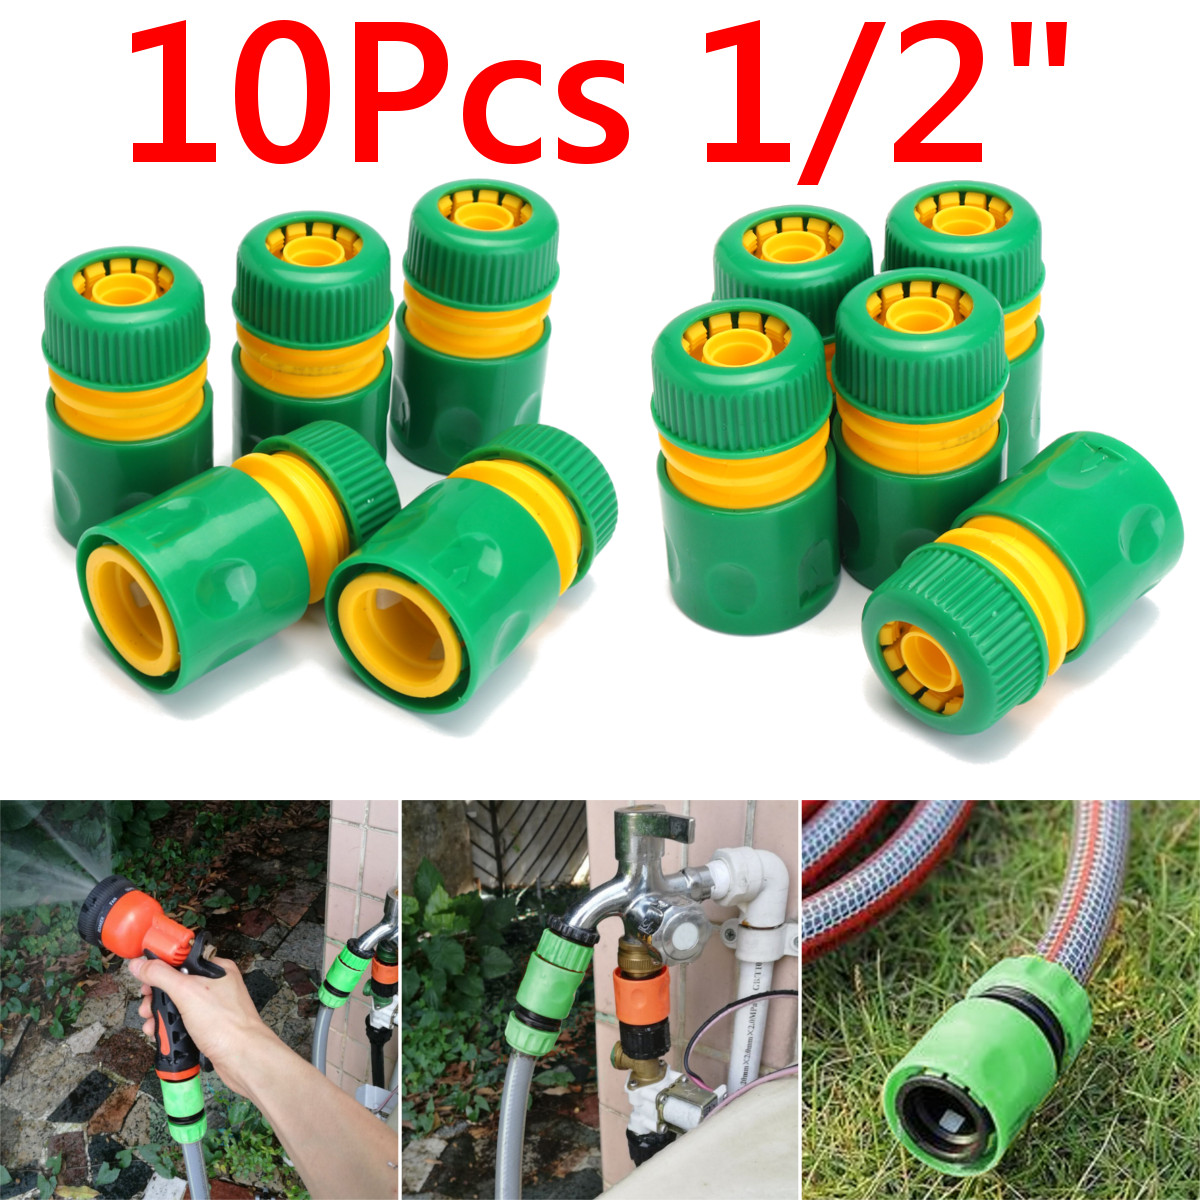 10pcs 12 connecteur de tuyau de tuyau deau du robinet de jardin Connexion rapide adaptateur raccord darrosage